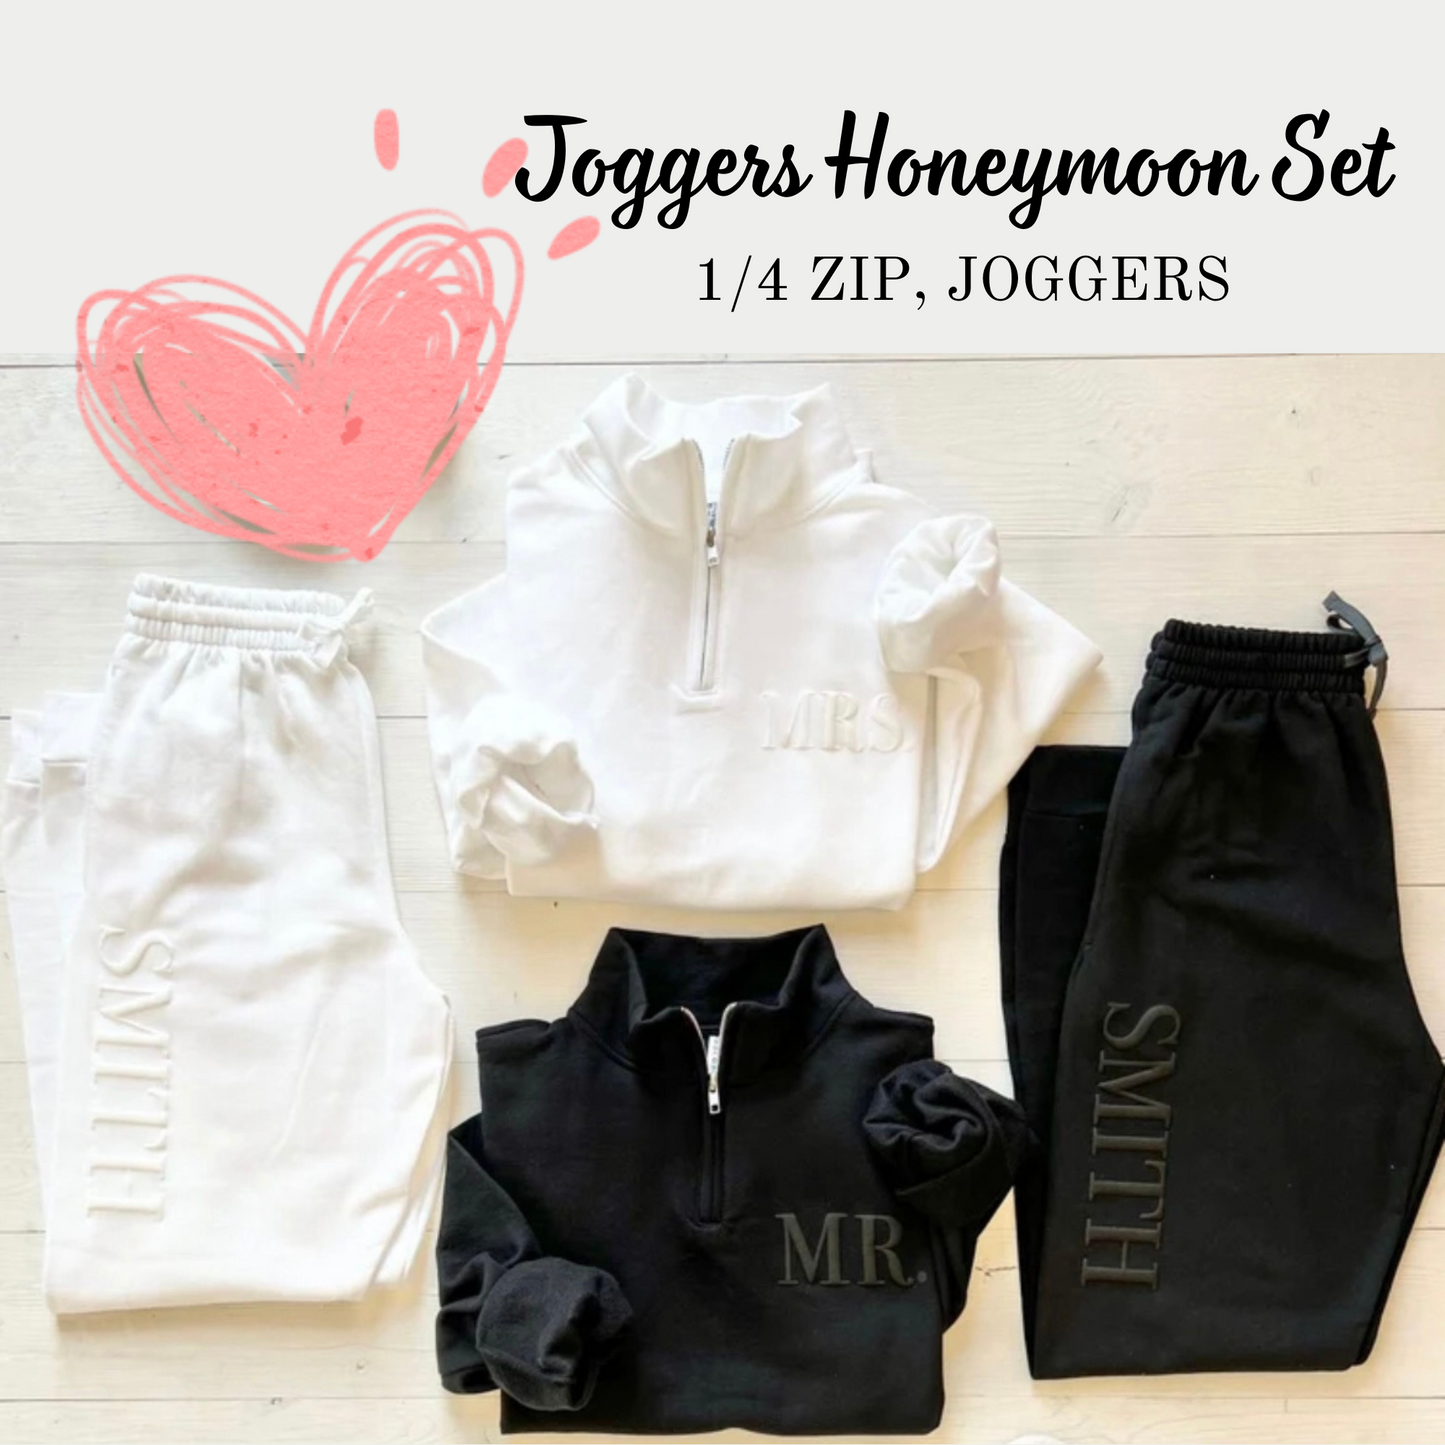 Joggers Honeymoon Set, Mr.and Mrs. Quarter Zip, Joggers.